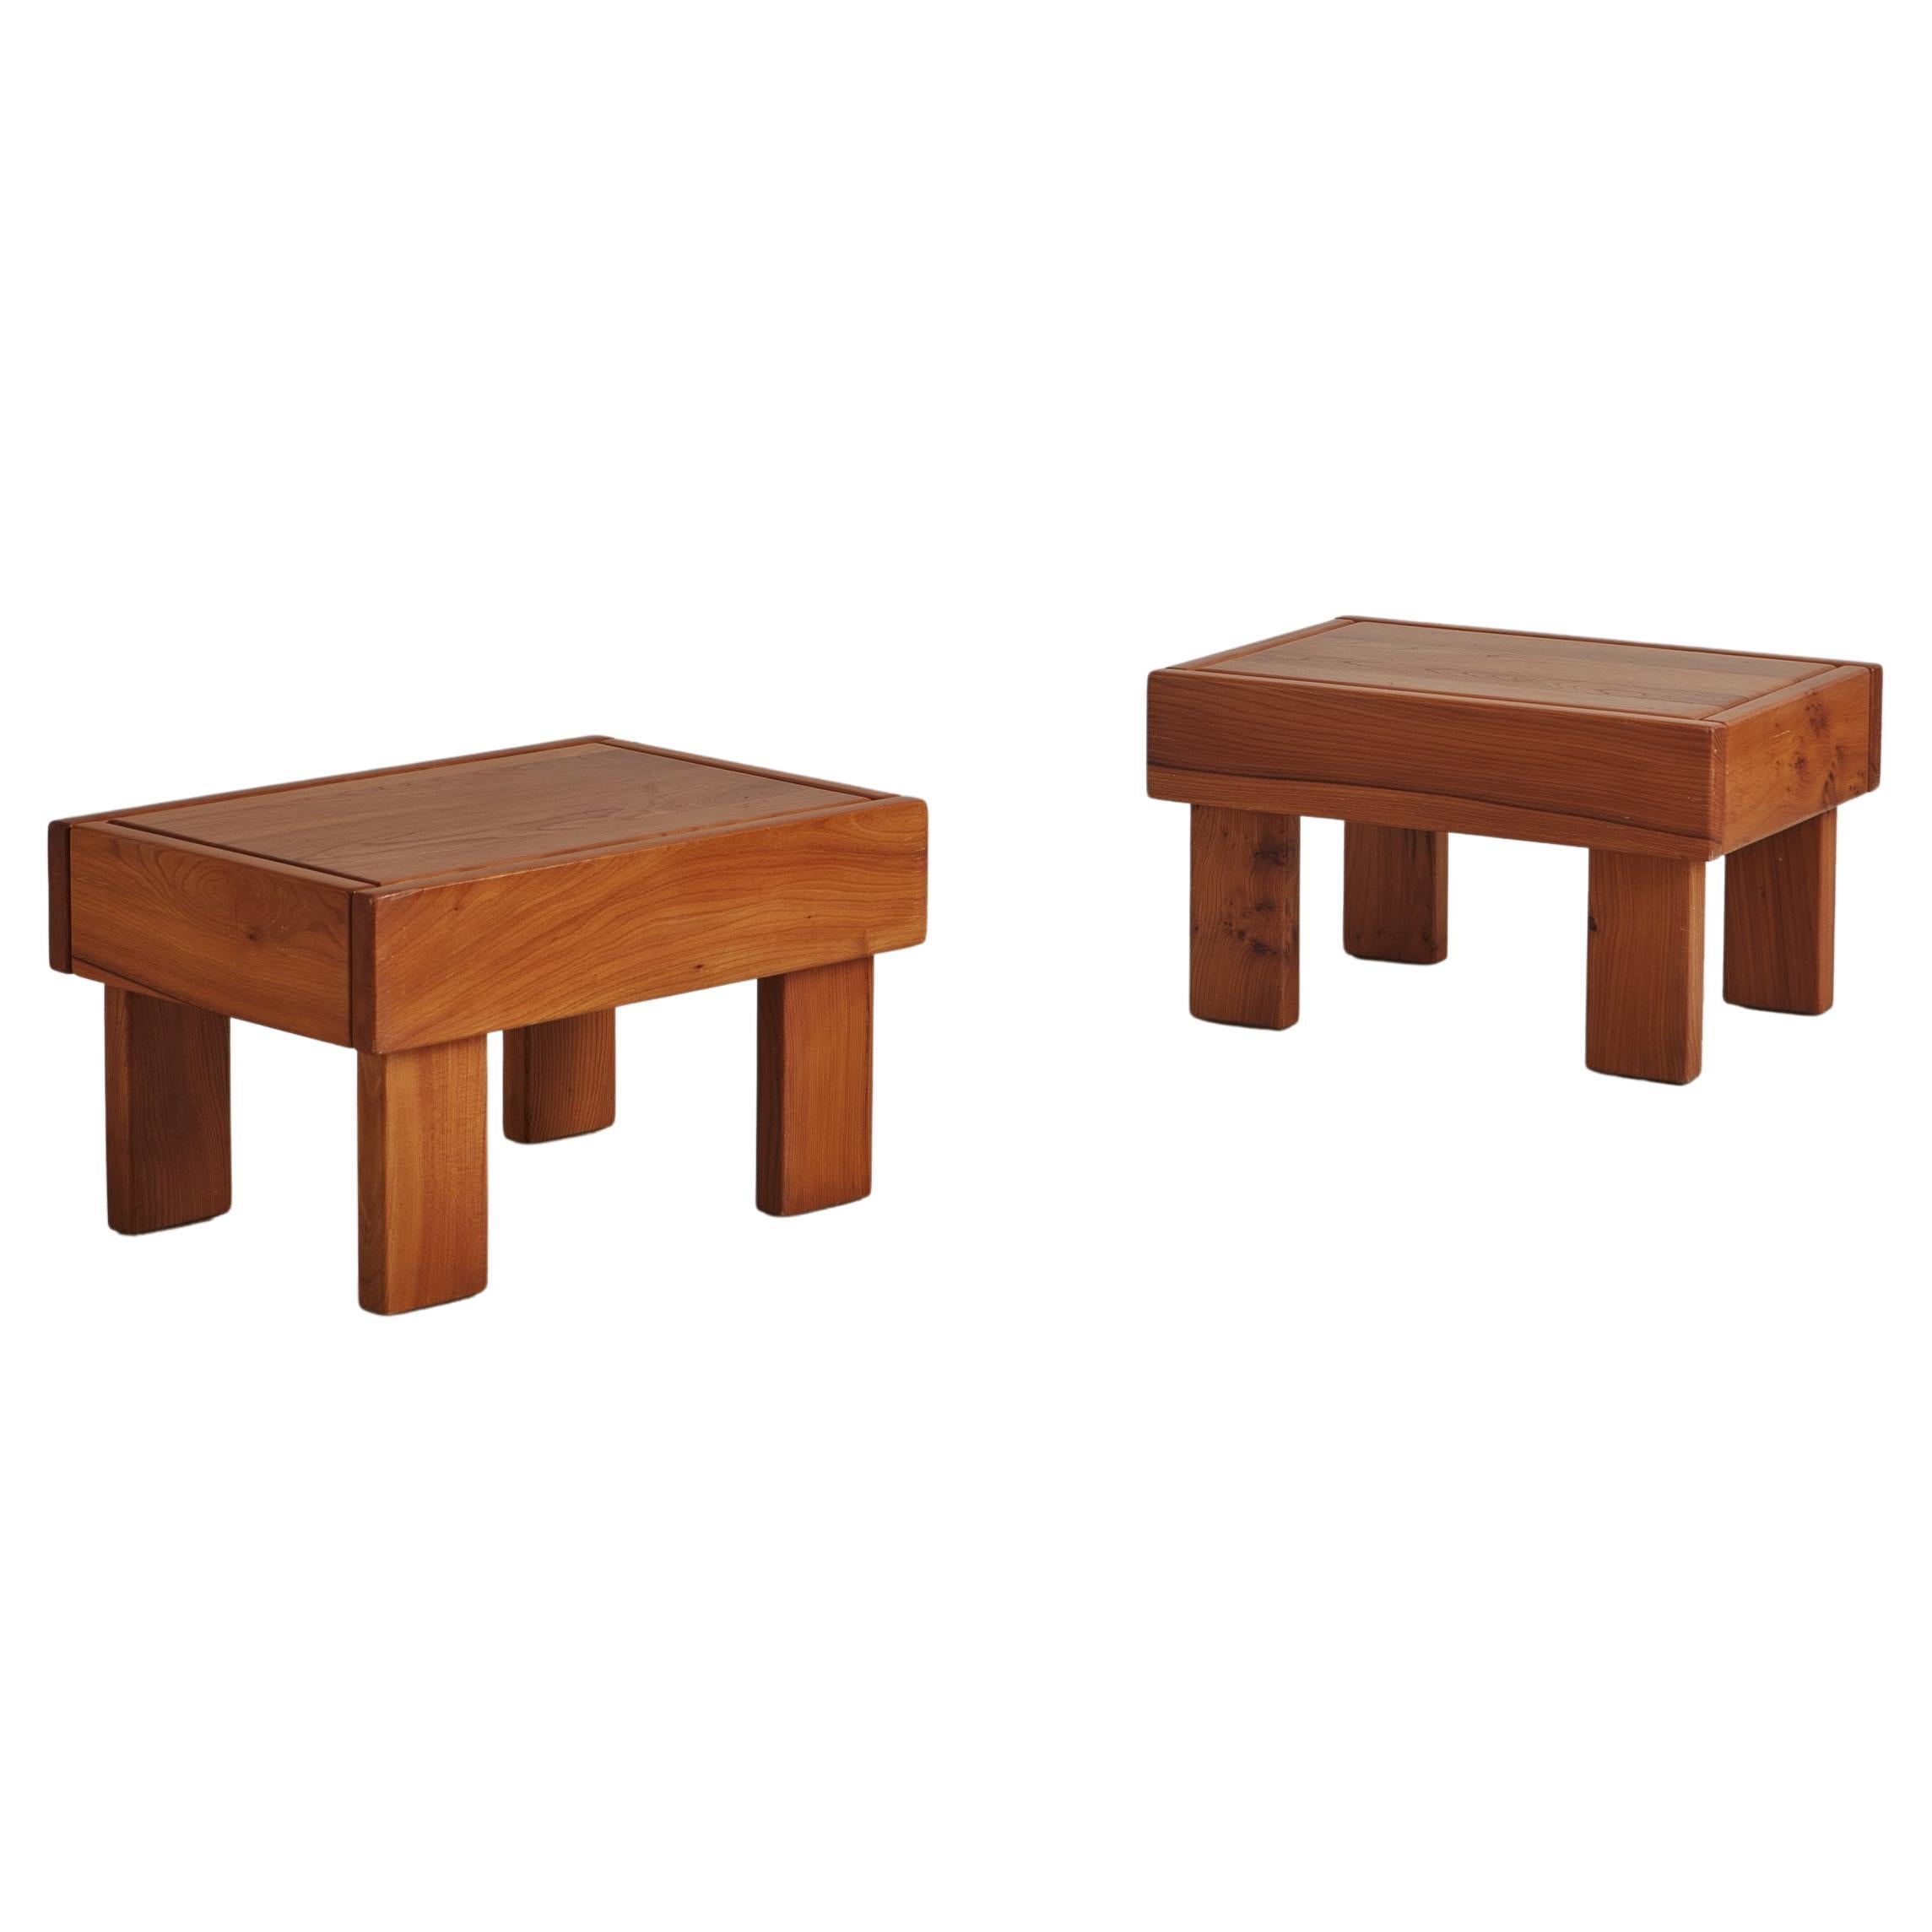 Pair of Elm Wood Side Tables by Maison Regain, France 1970s